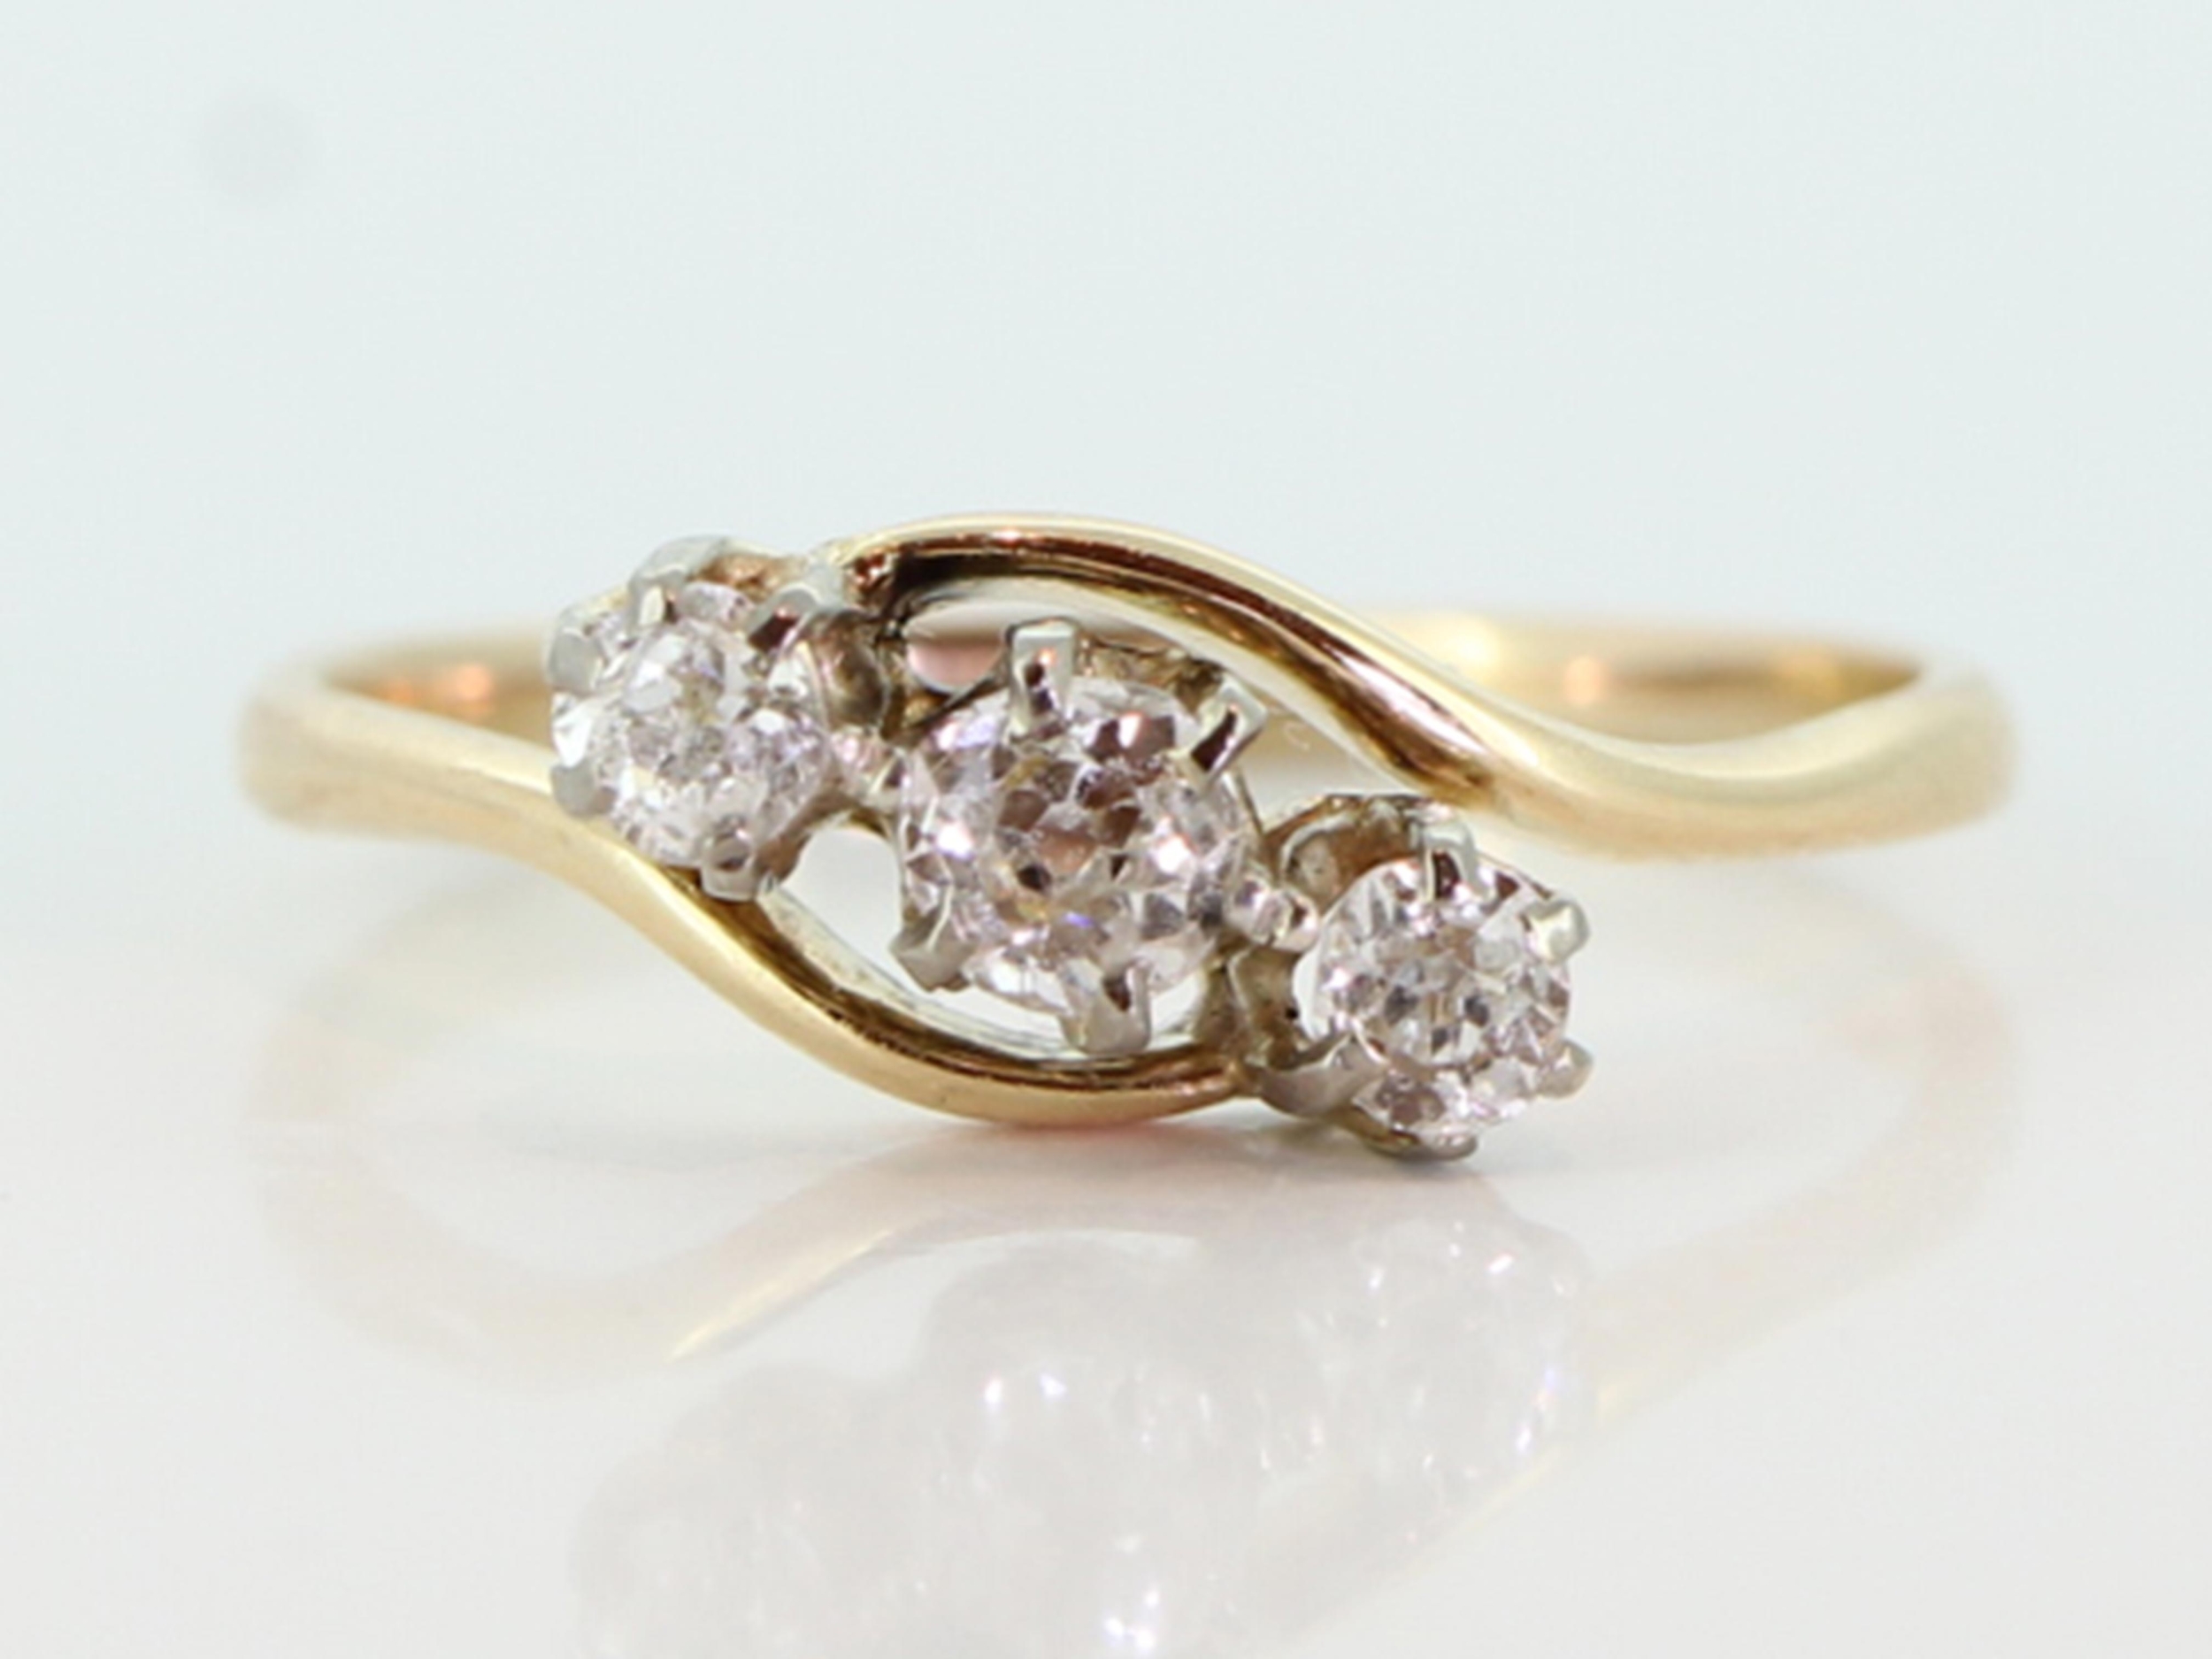 Stunning Old Mined Diamond 18 Carat Gold Ring